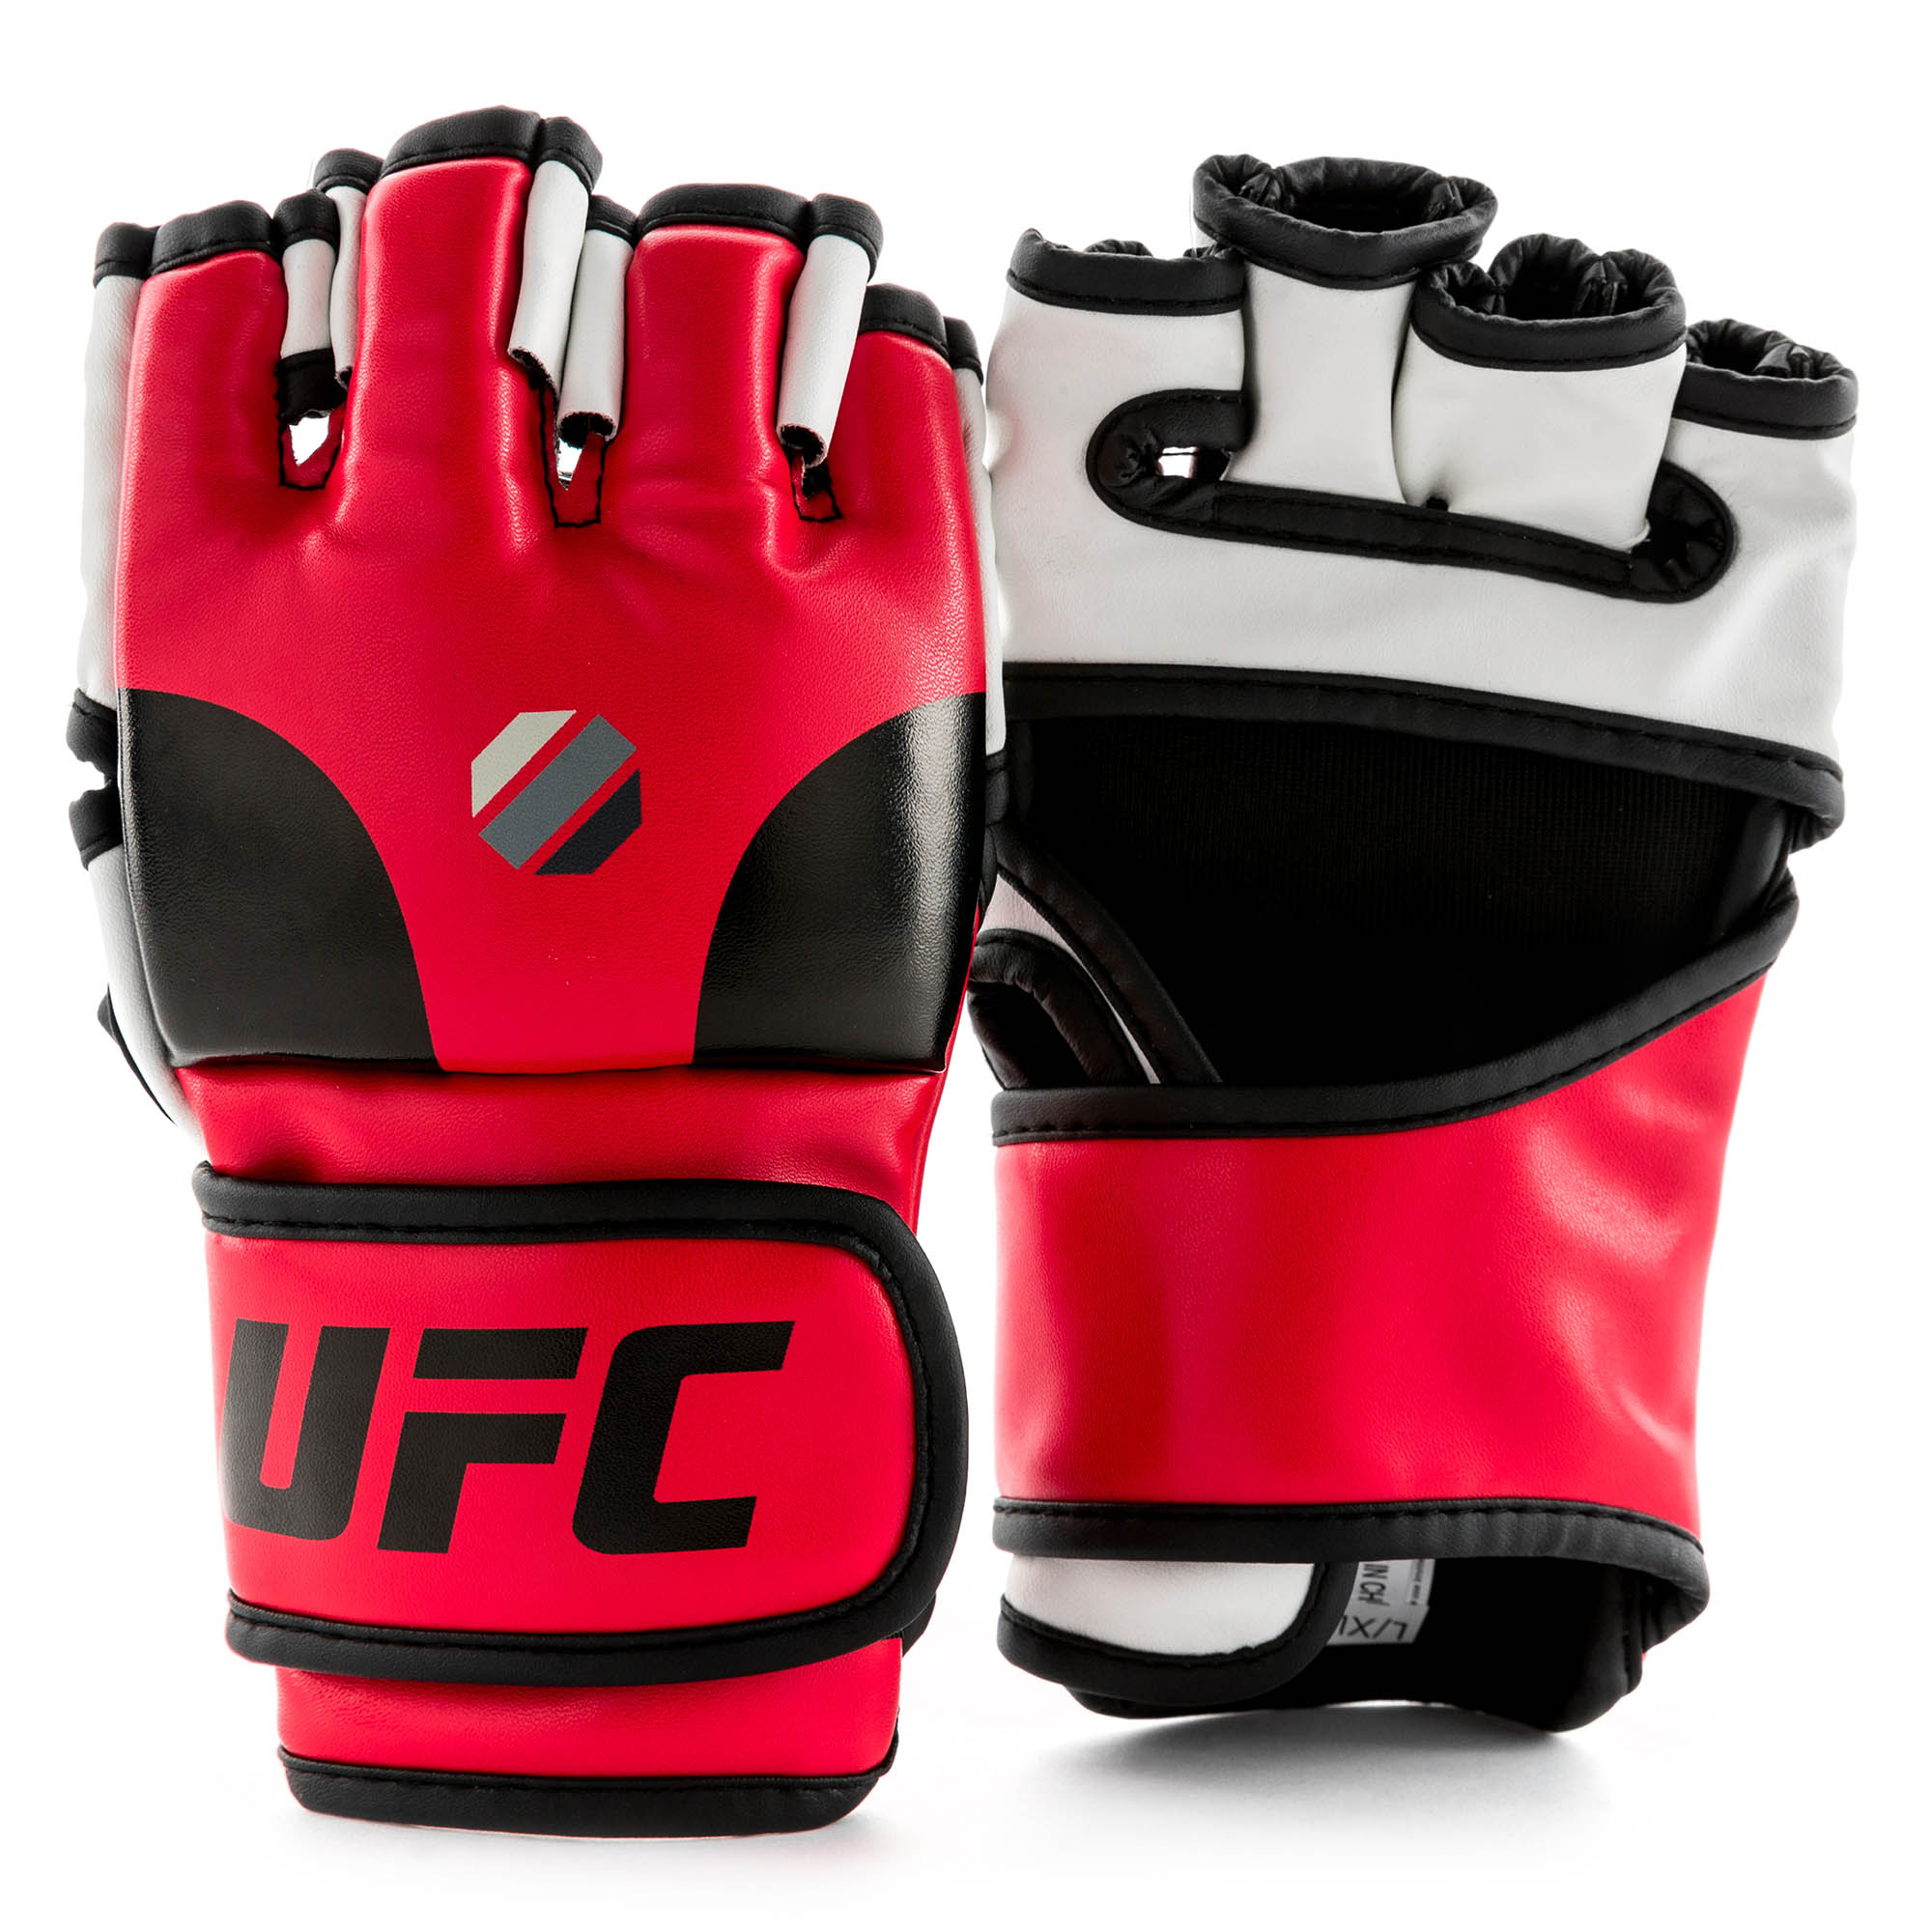 UFC Open Palm MMA Training Gloves